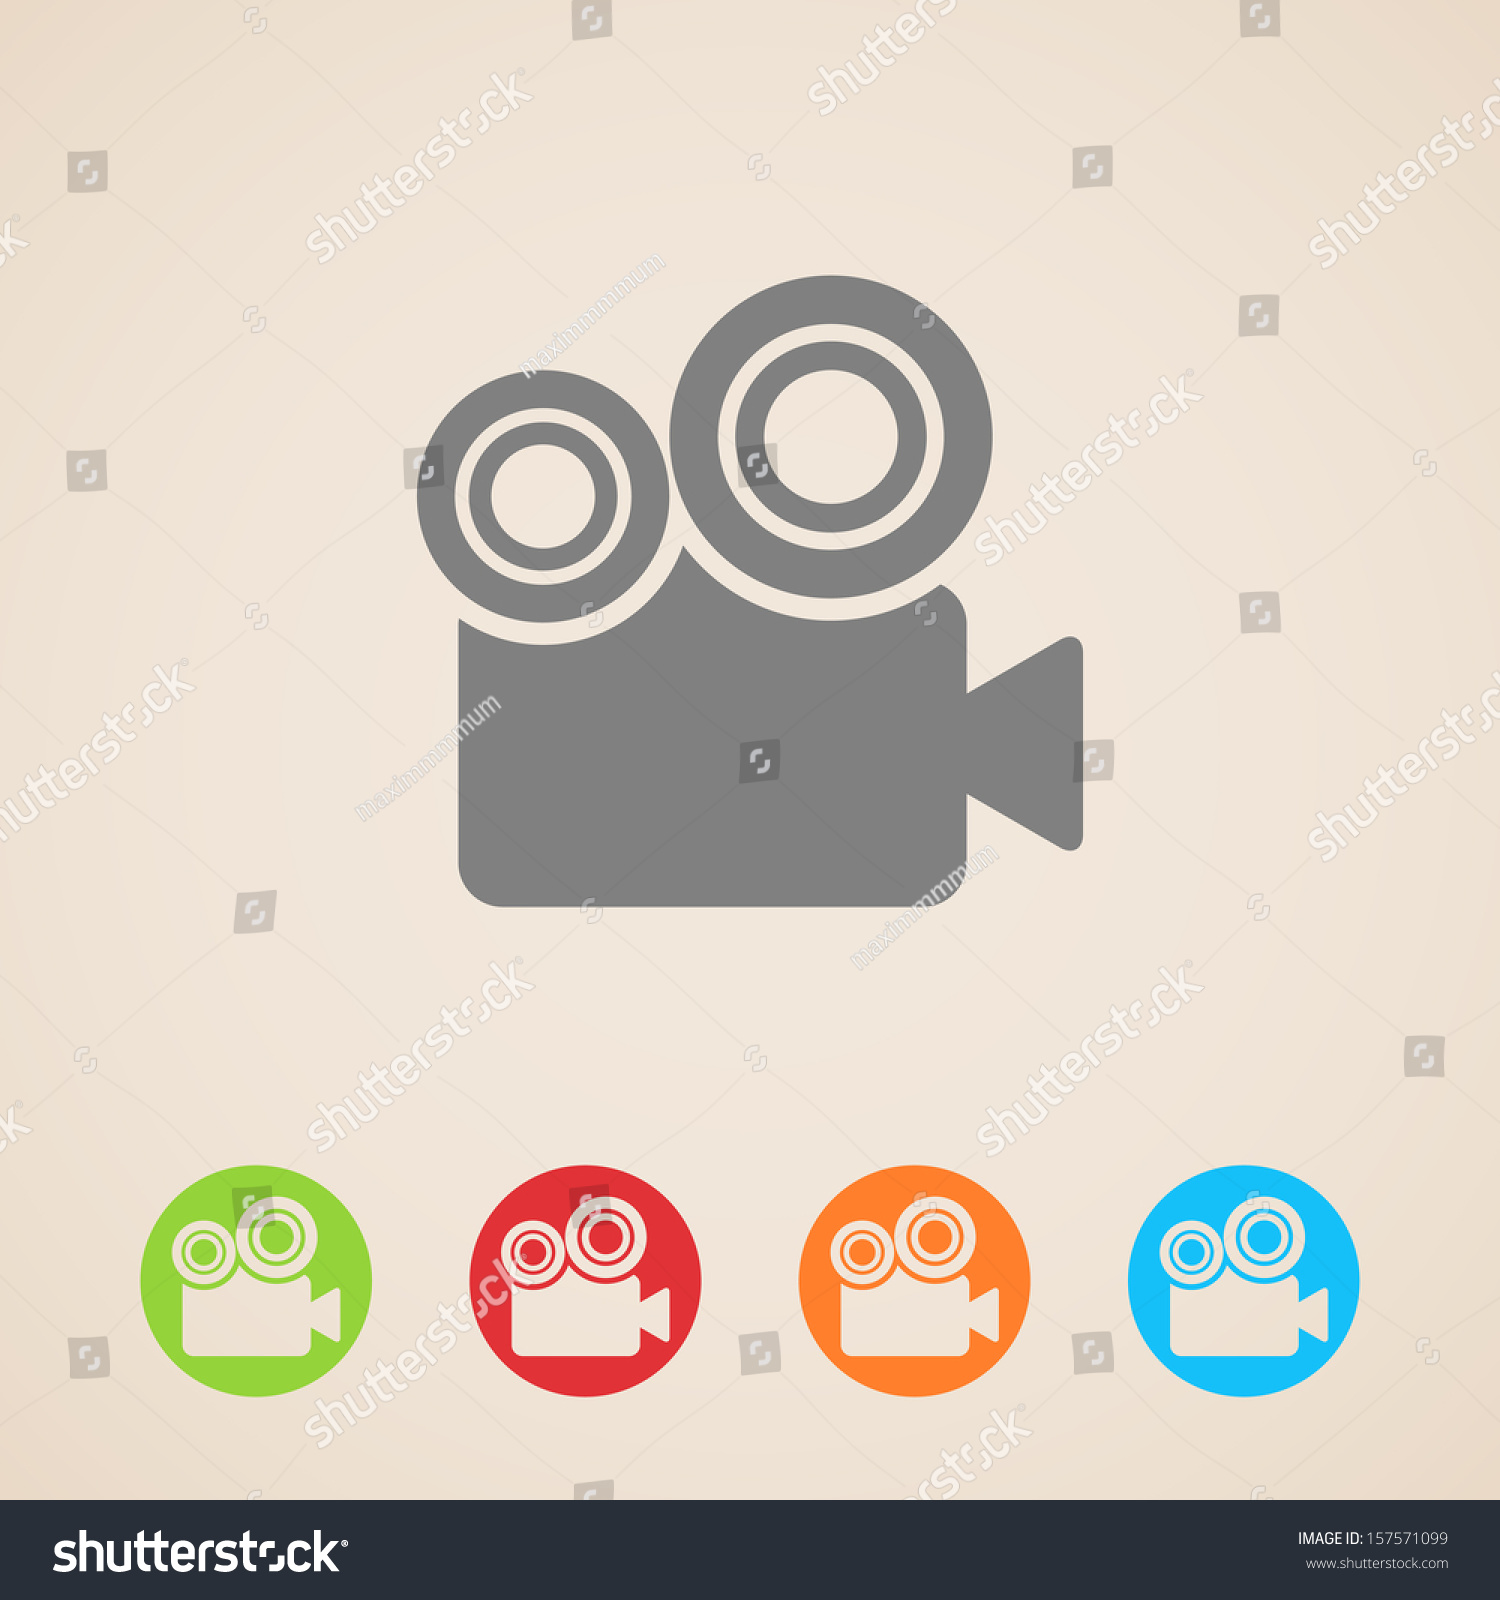 Vector Movie Camera Icons - 157571099 : Shutterstock